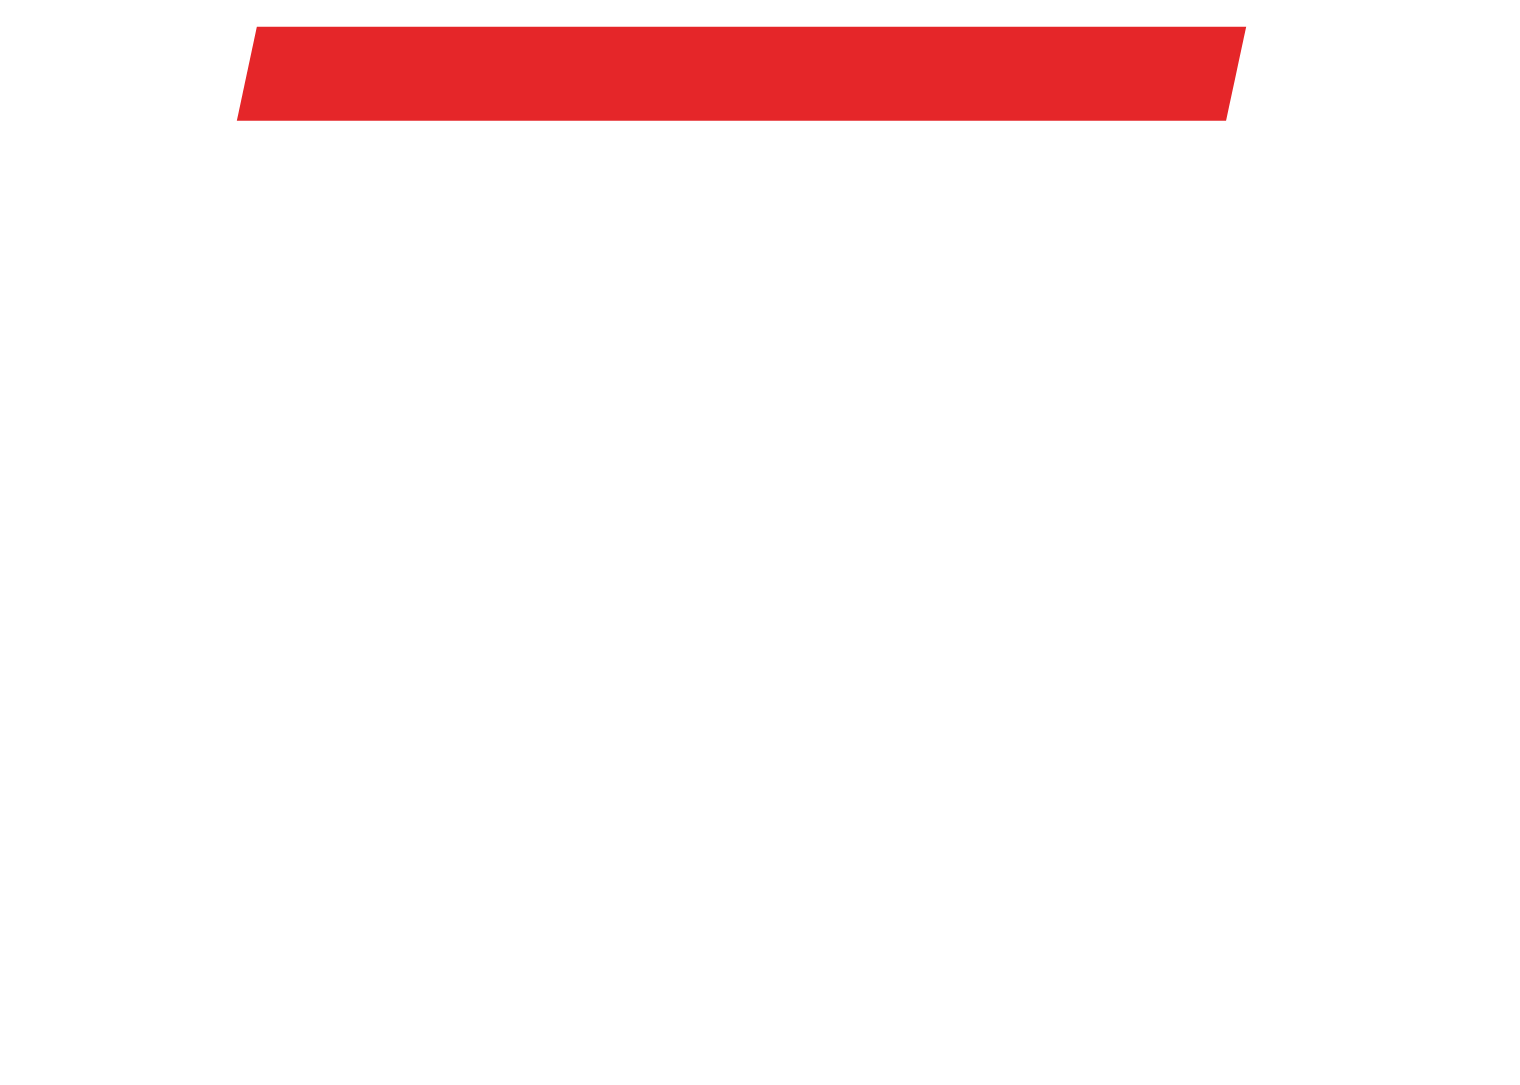 Hong Kong Ferry logo for dark backgrounds (transparent PNG)